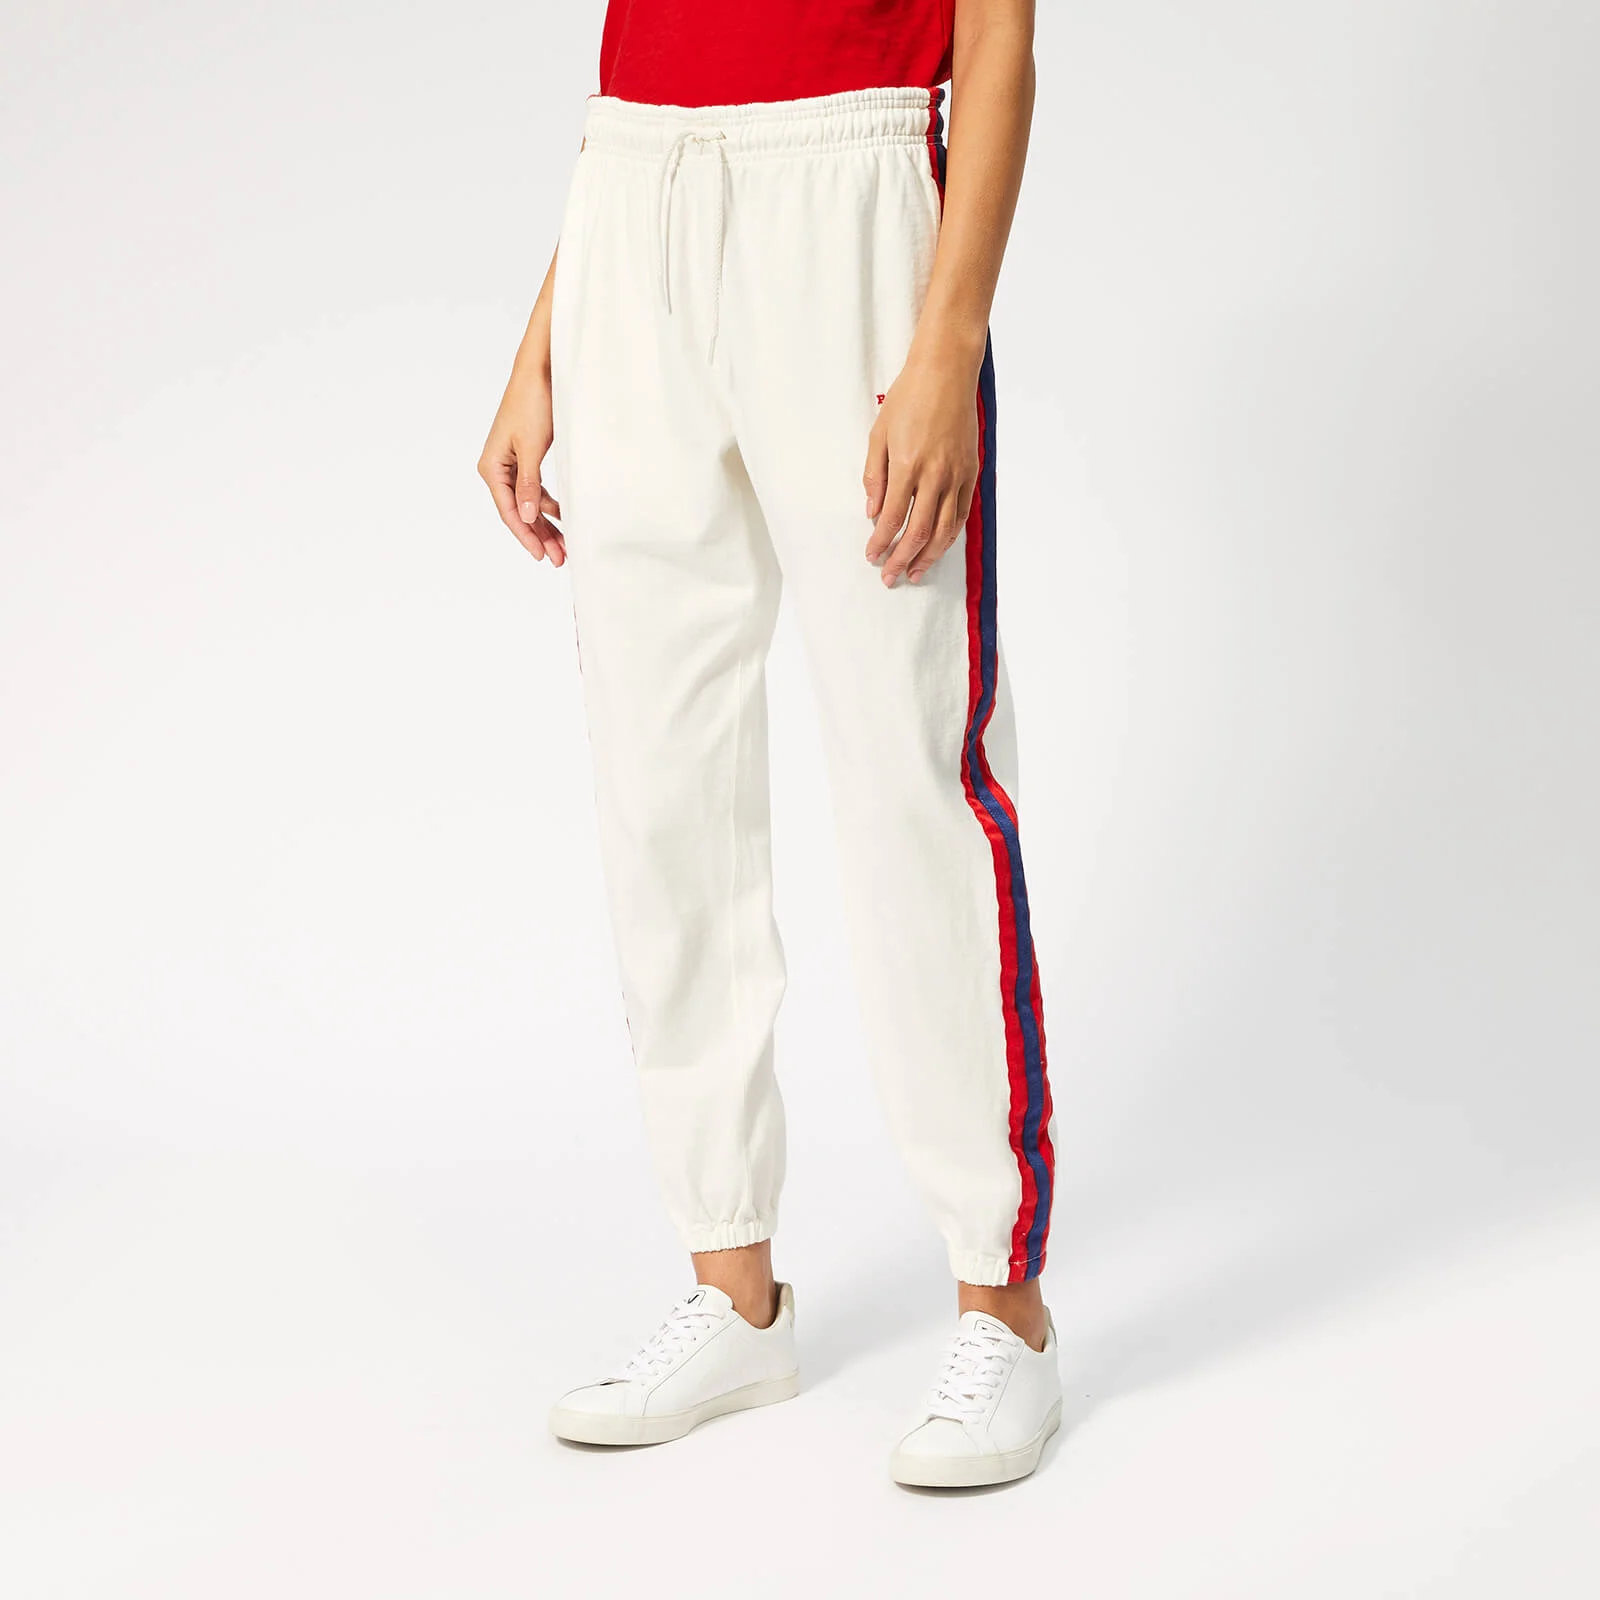 Polo Ralph Lauren Women's Sweatpants - White Image 1